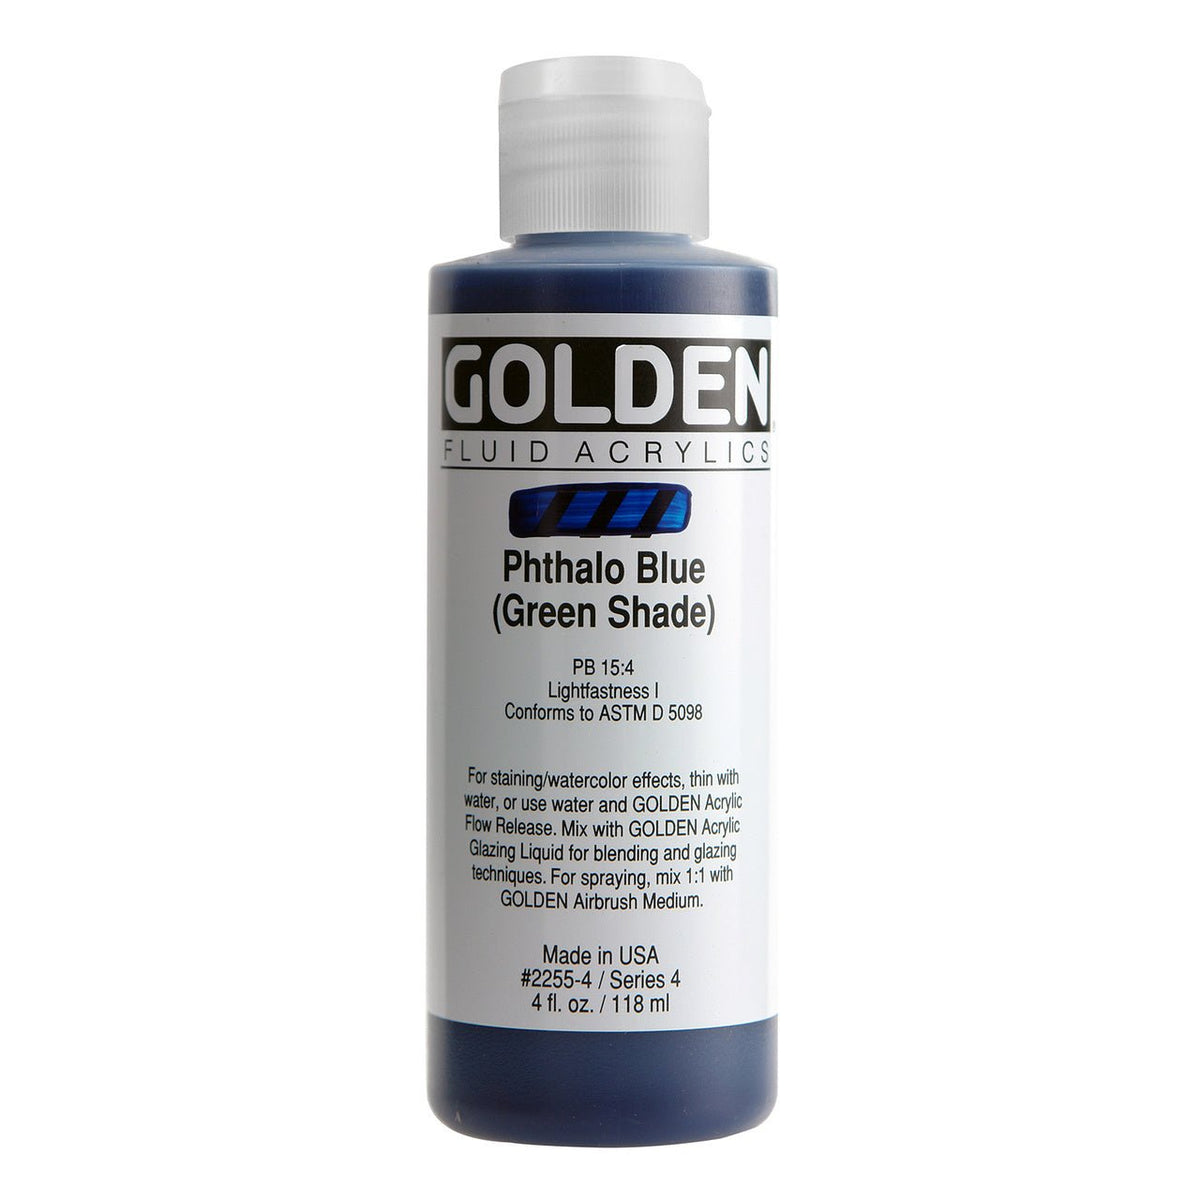 Golden Fluid Acrylic Phthalo Blue (green shade) 4 oz - merriartist.com